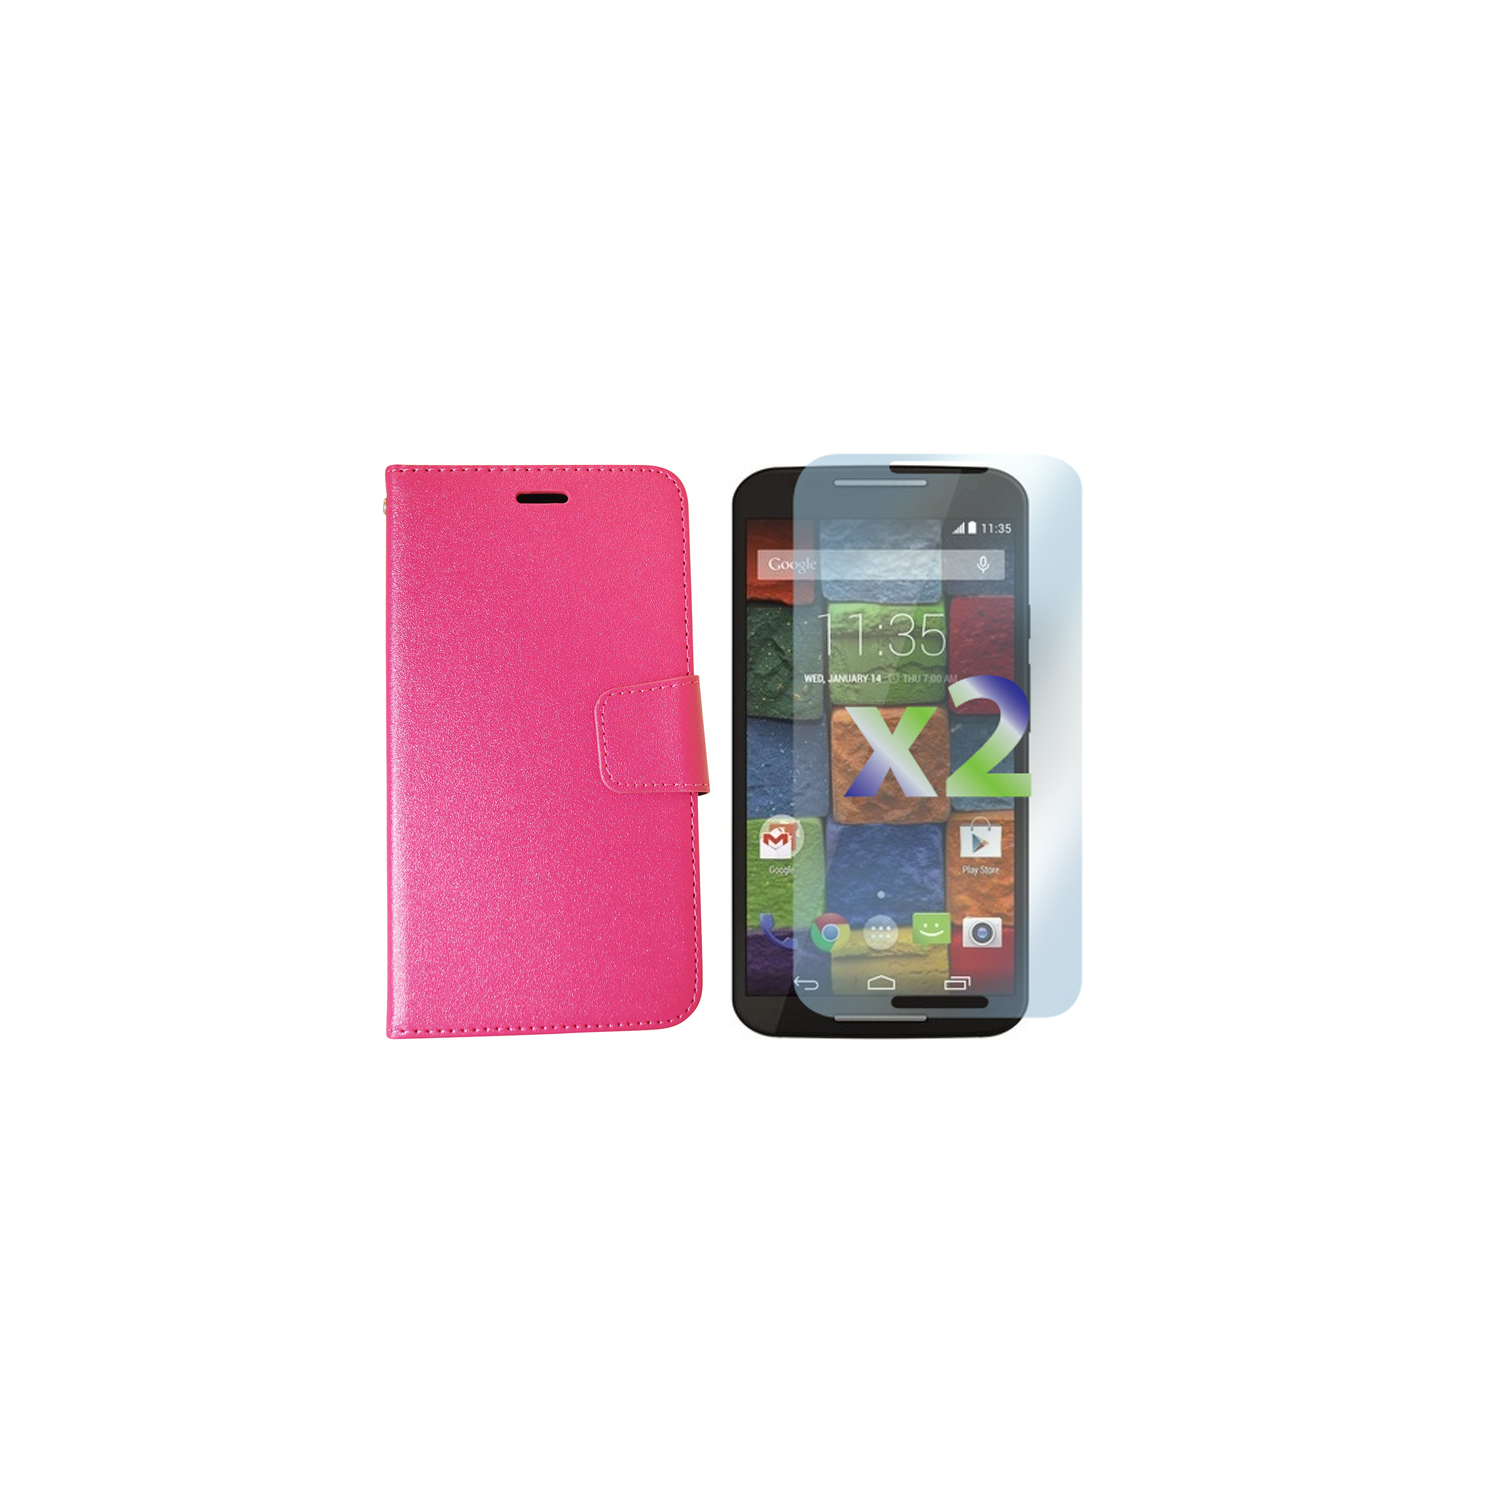 Exian Motorola Moto X2(2nd Gen) Screen Protectors X 2 and PU Leather Wallet Hot Pink